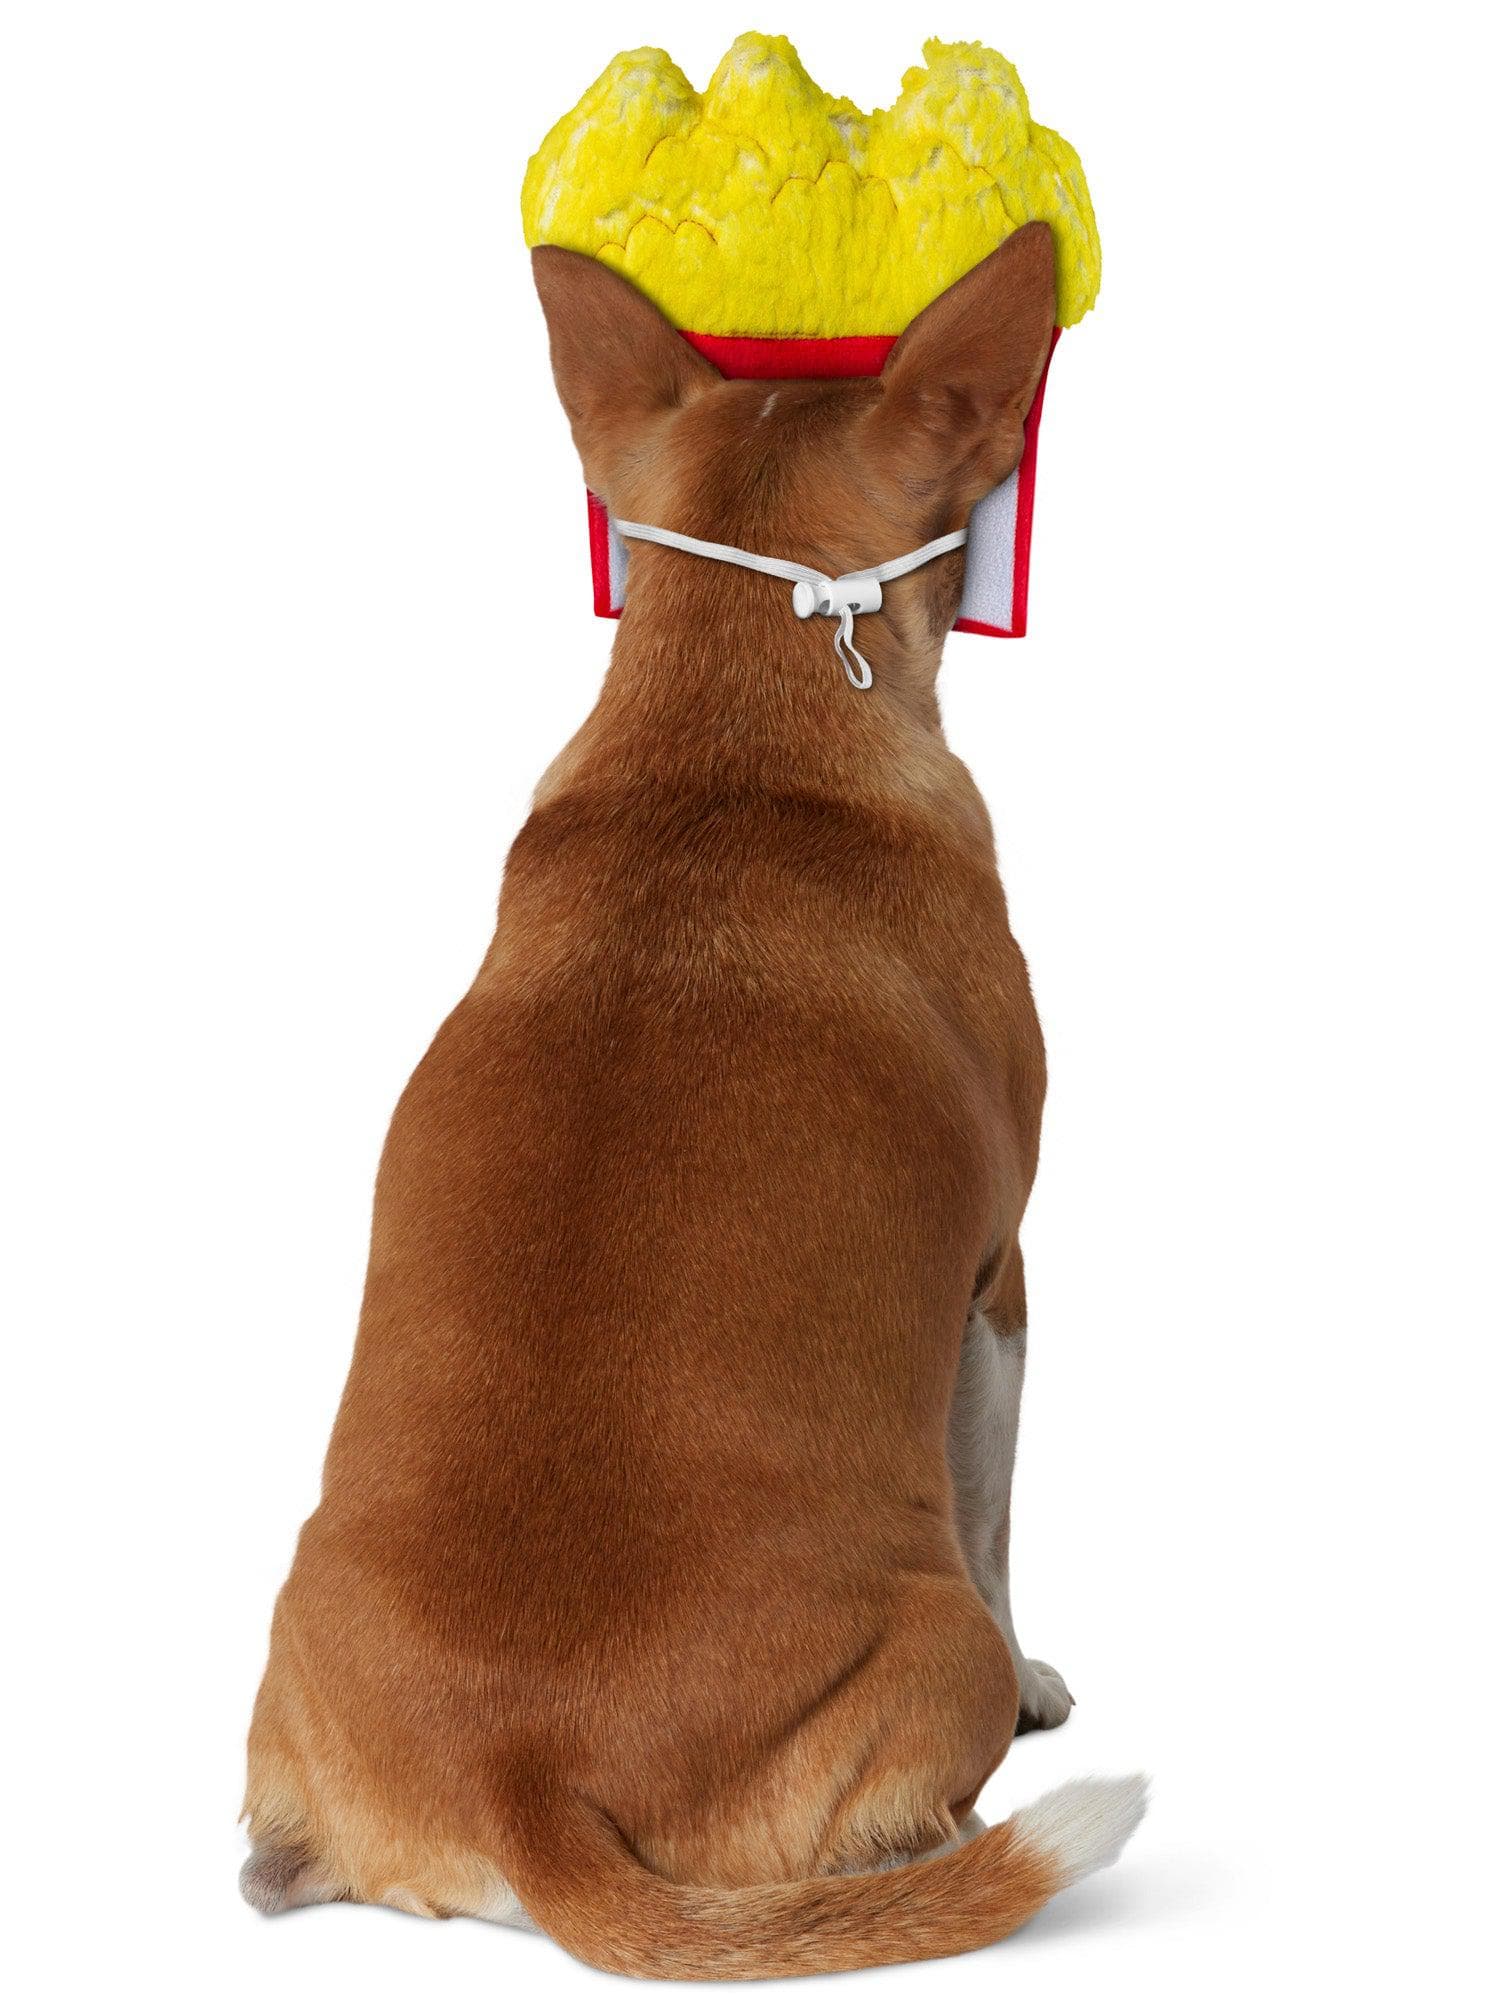 Yummy World Popcorn Pet Headpiece by Kidrobot - costumes.com